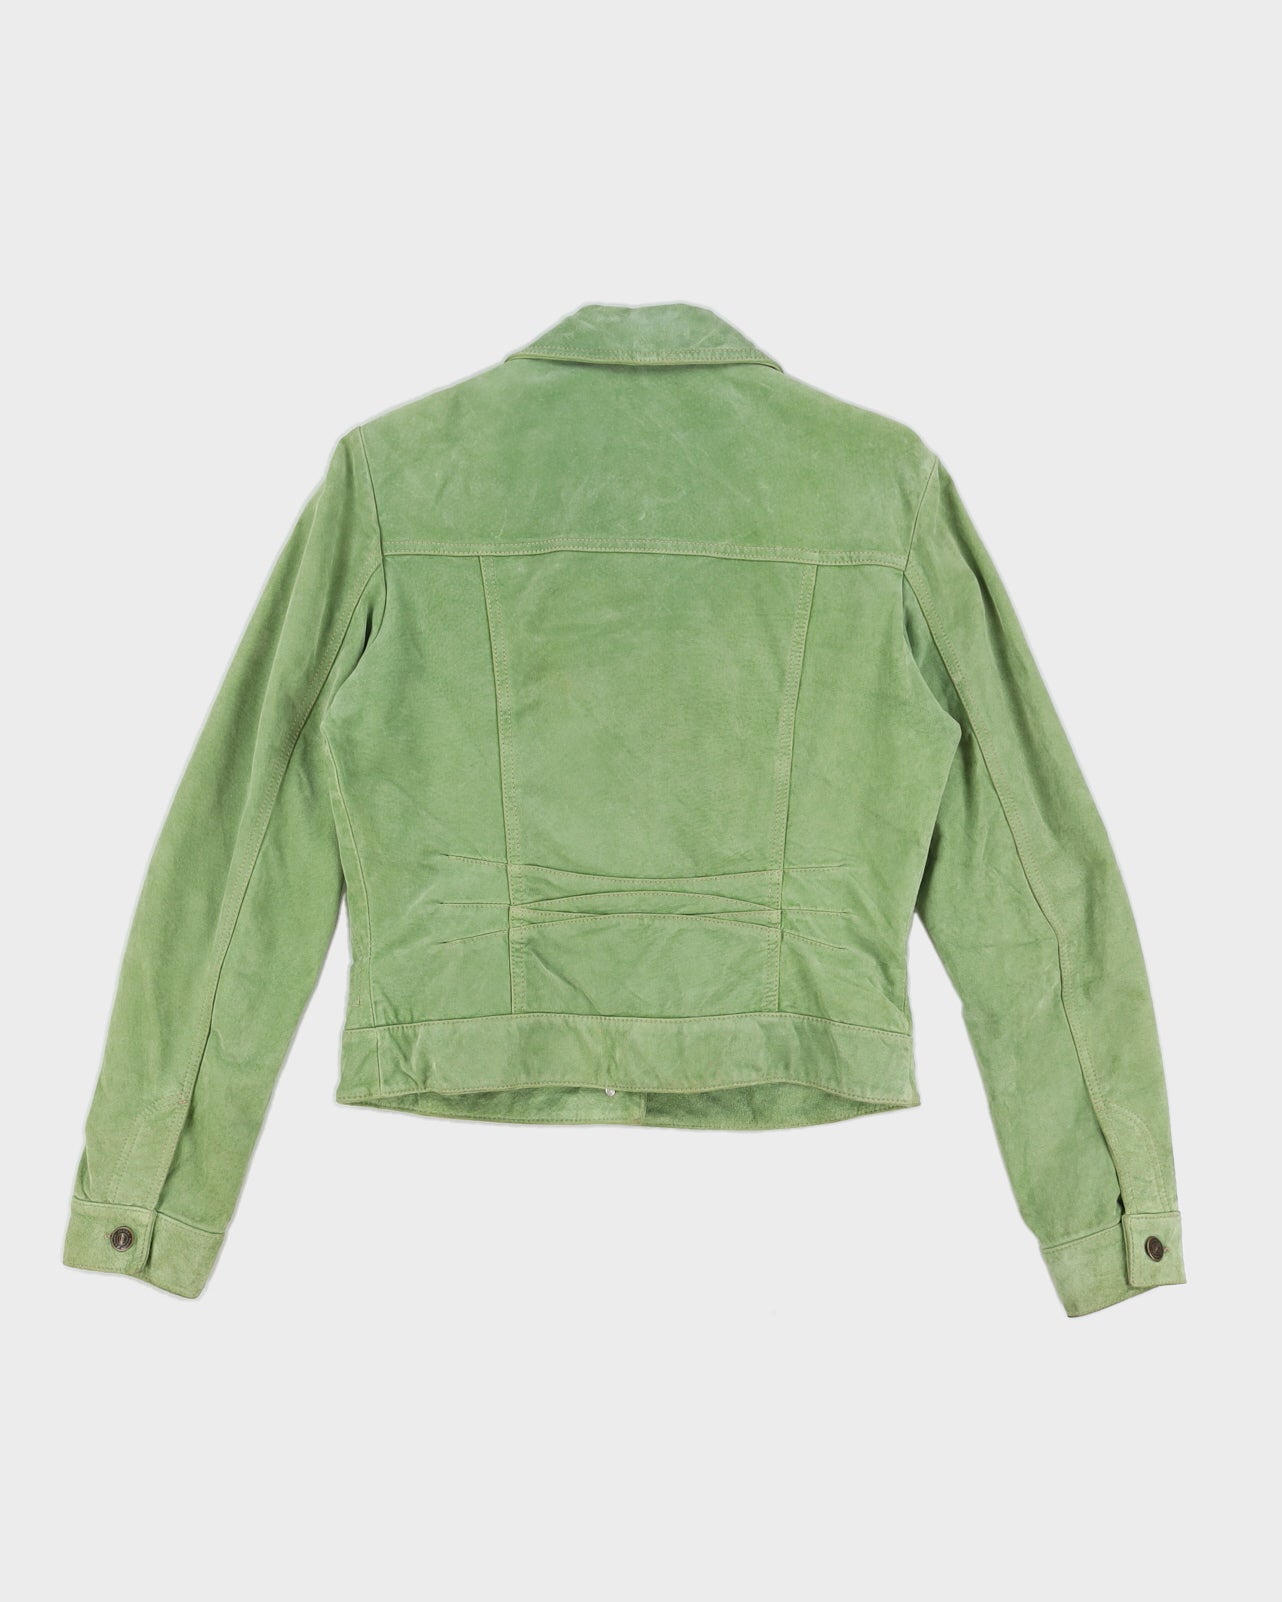 Vintage 90s Danier Women's Green Suede Jacket - S/M